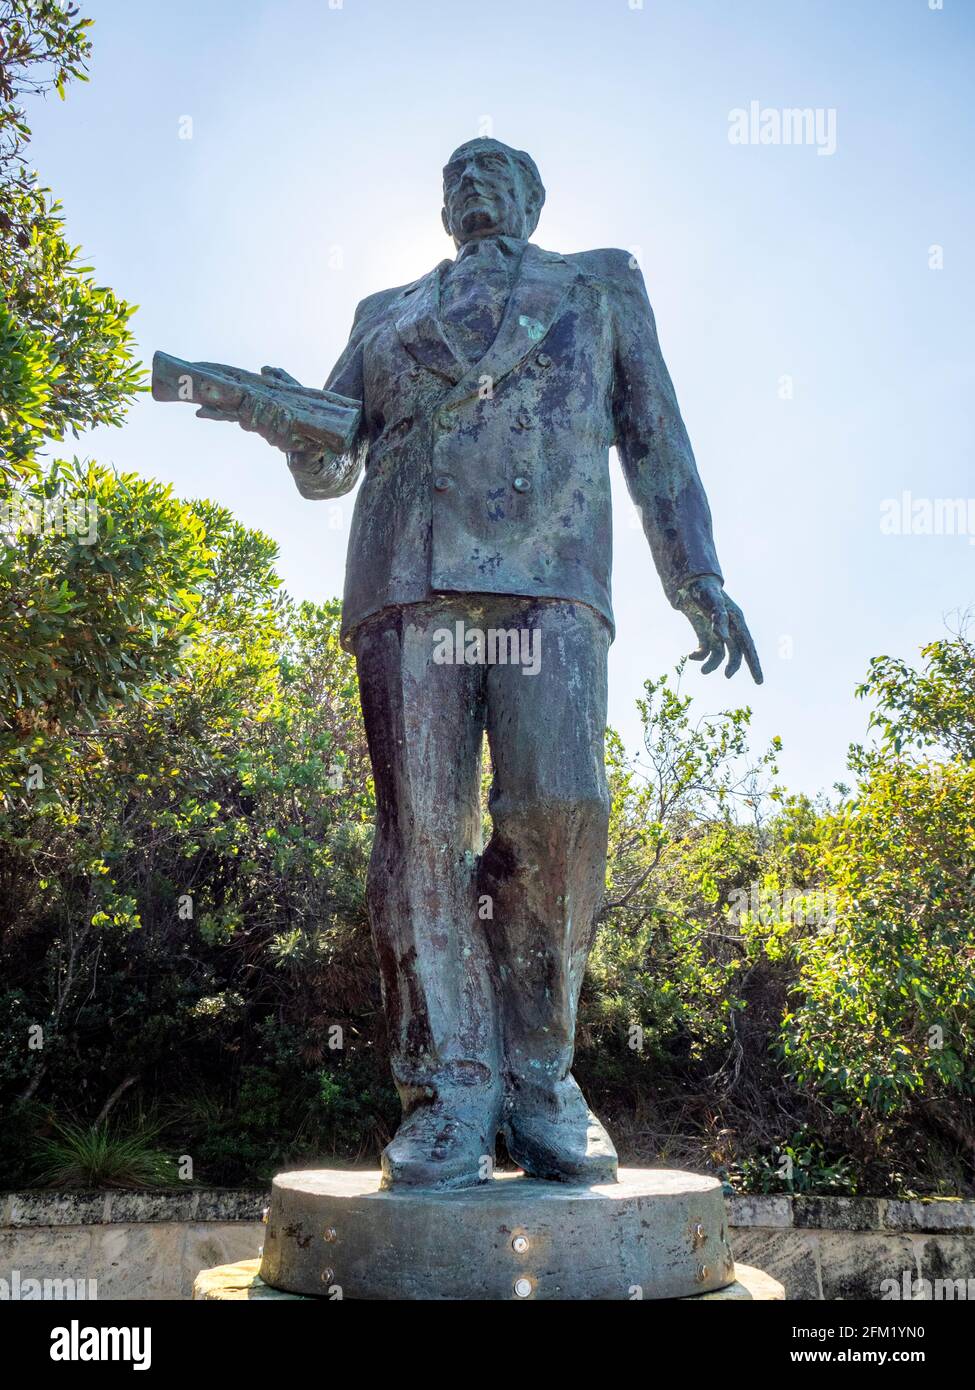 WW1 Anzac monument bronze statue of Mustafa Kemal Ataturk by Burhan Alkar sculptor artist overlooking King George Sound Albany Western Australia. Stock Photo